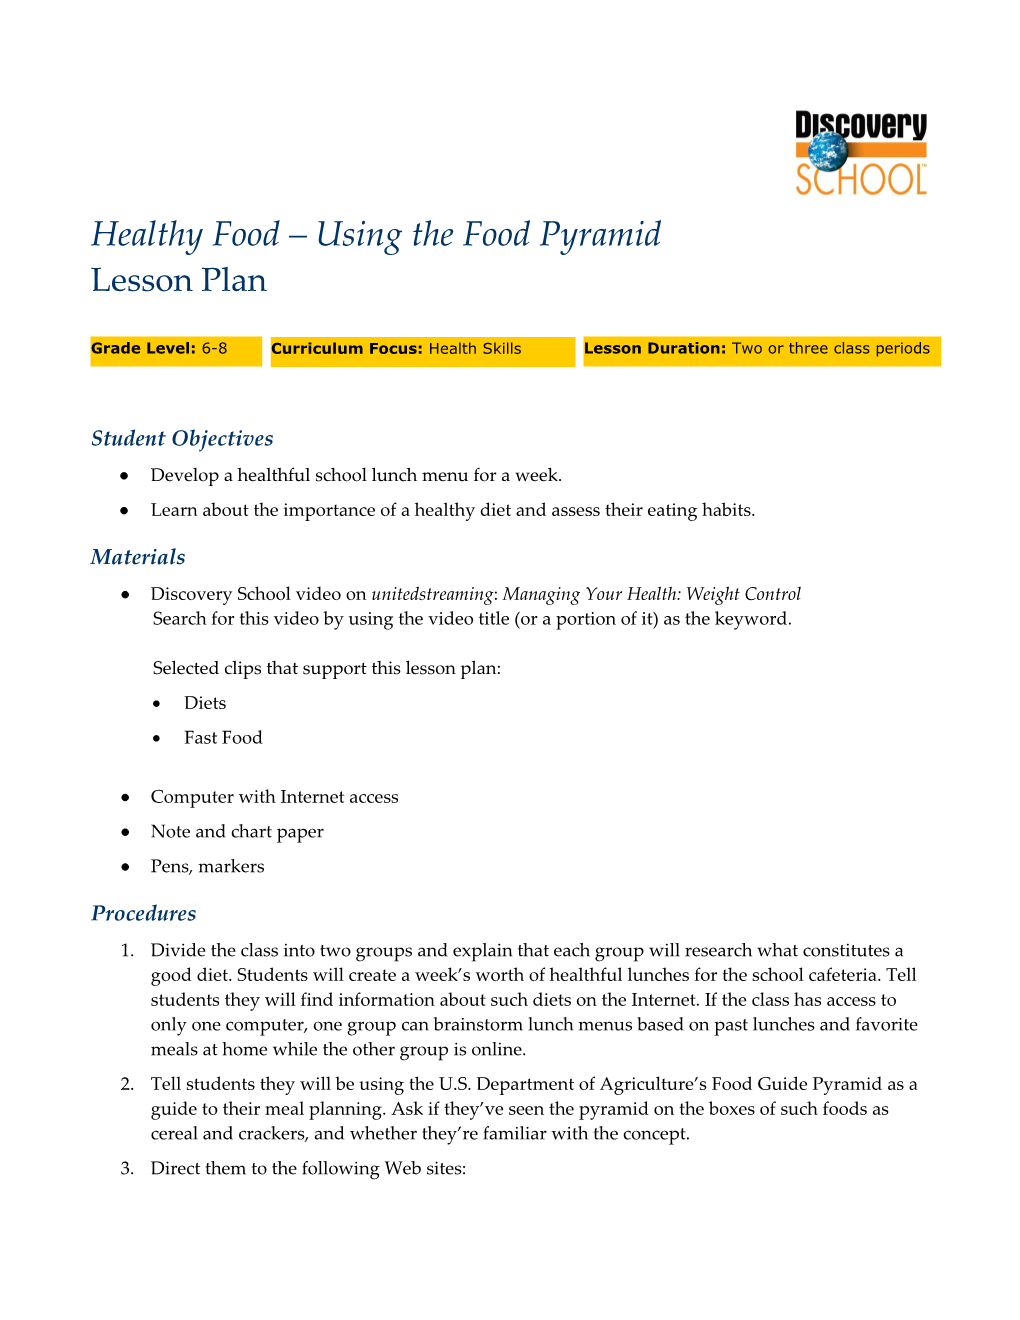 Healthy Food Using the Food Pyramid 1